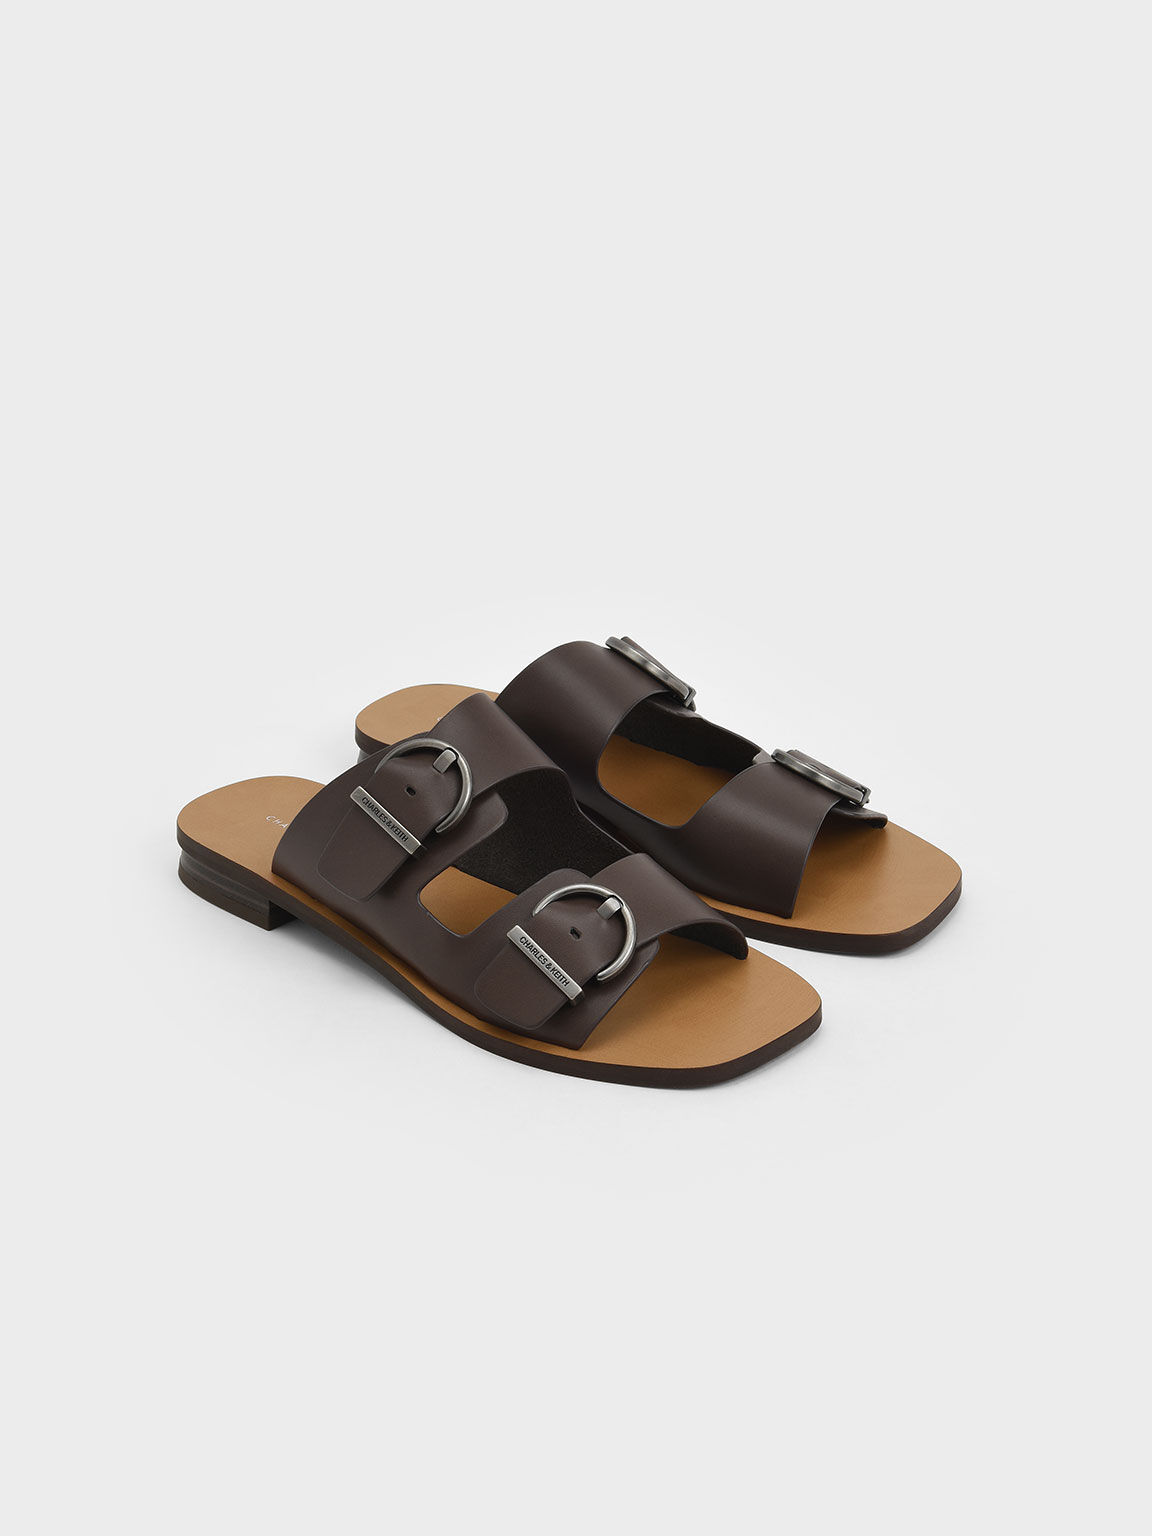 Double Buckle Strap Slide Sandals, Dark Brown, hi-res